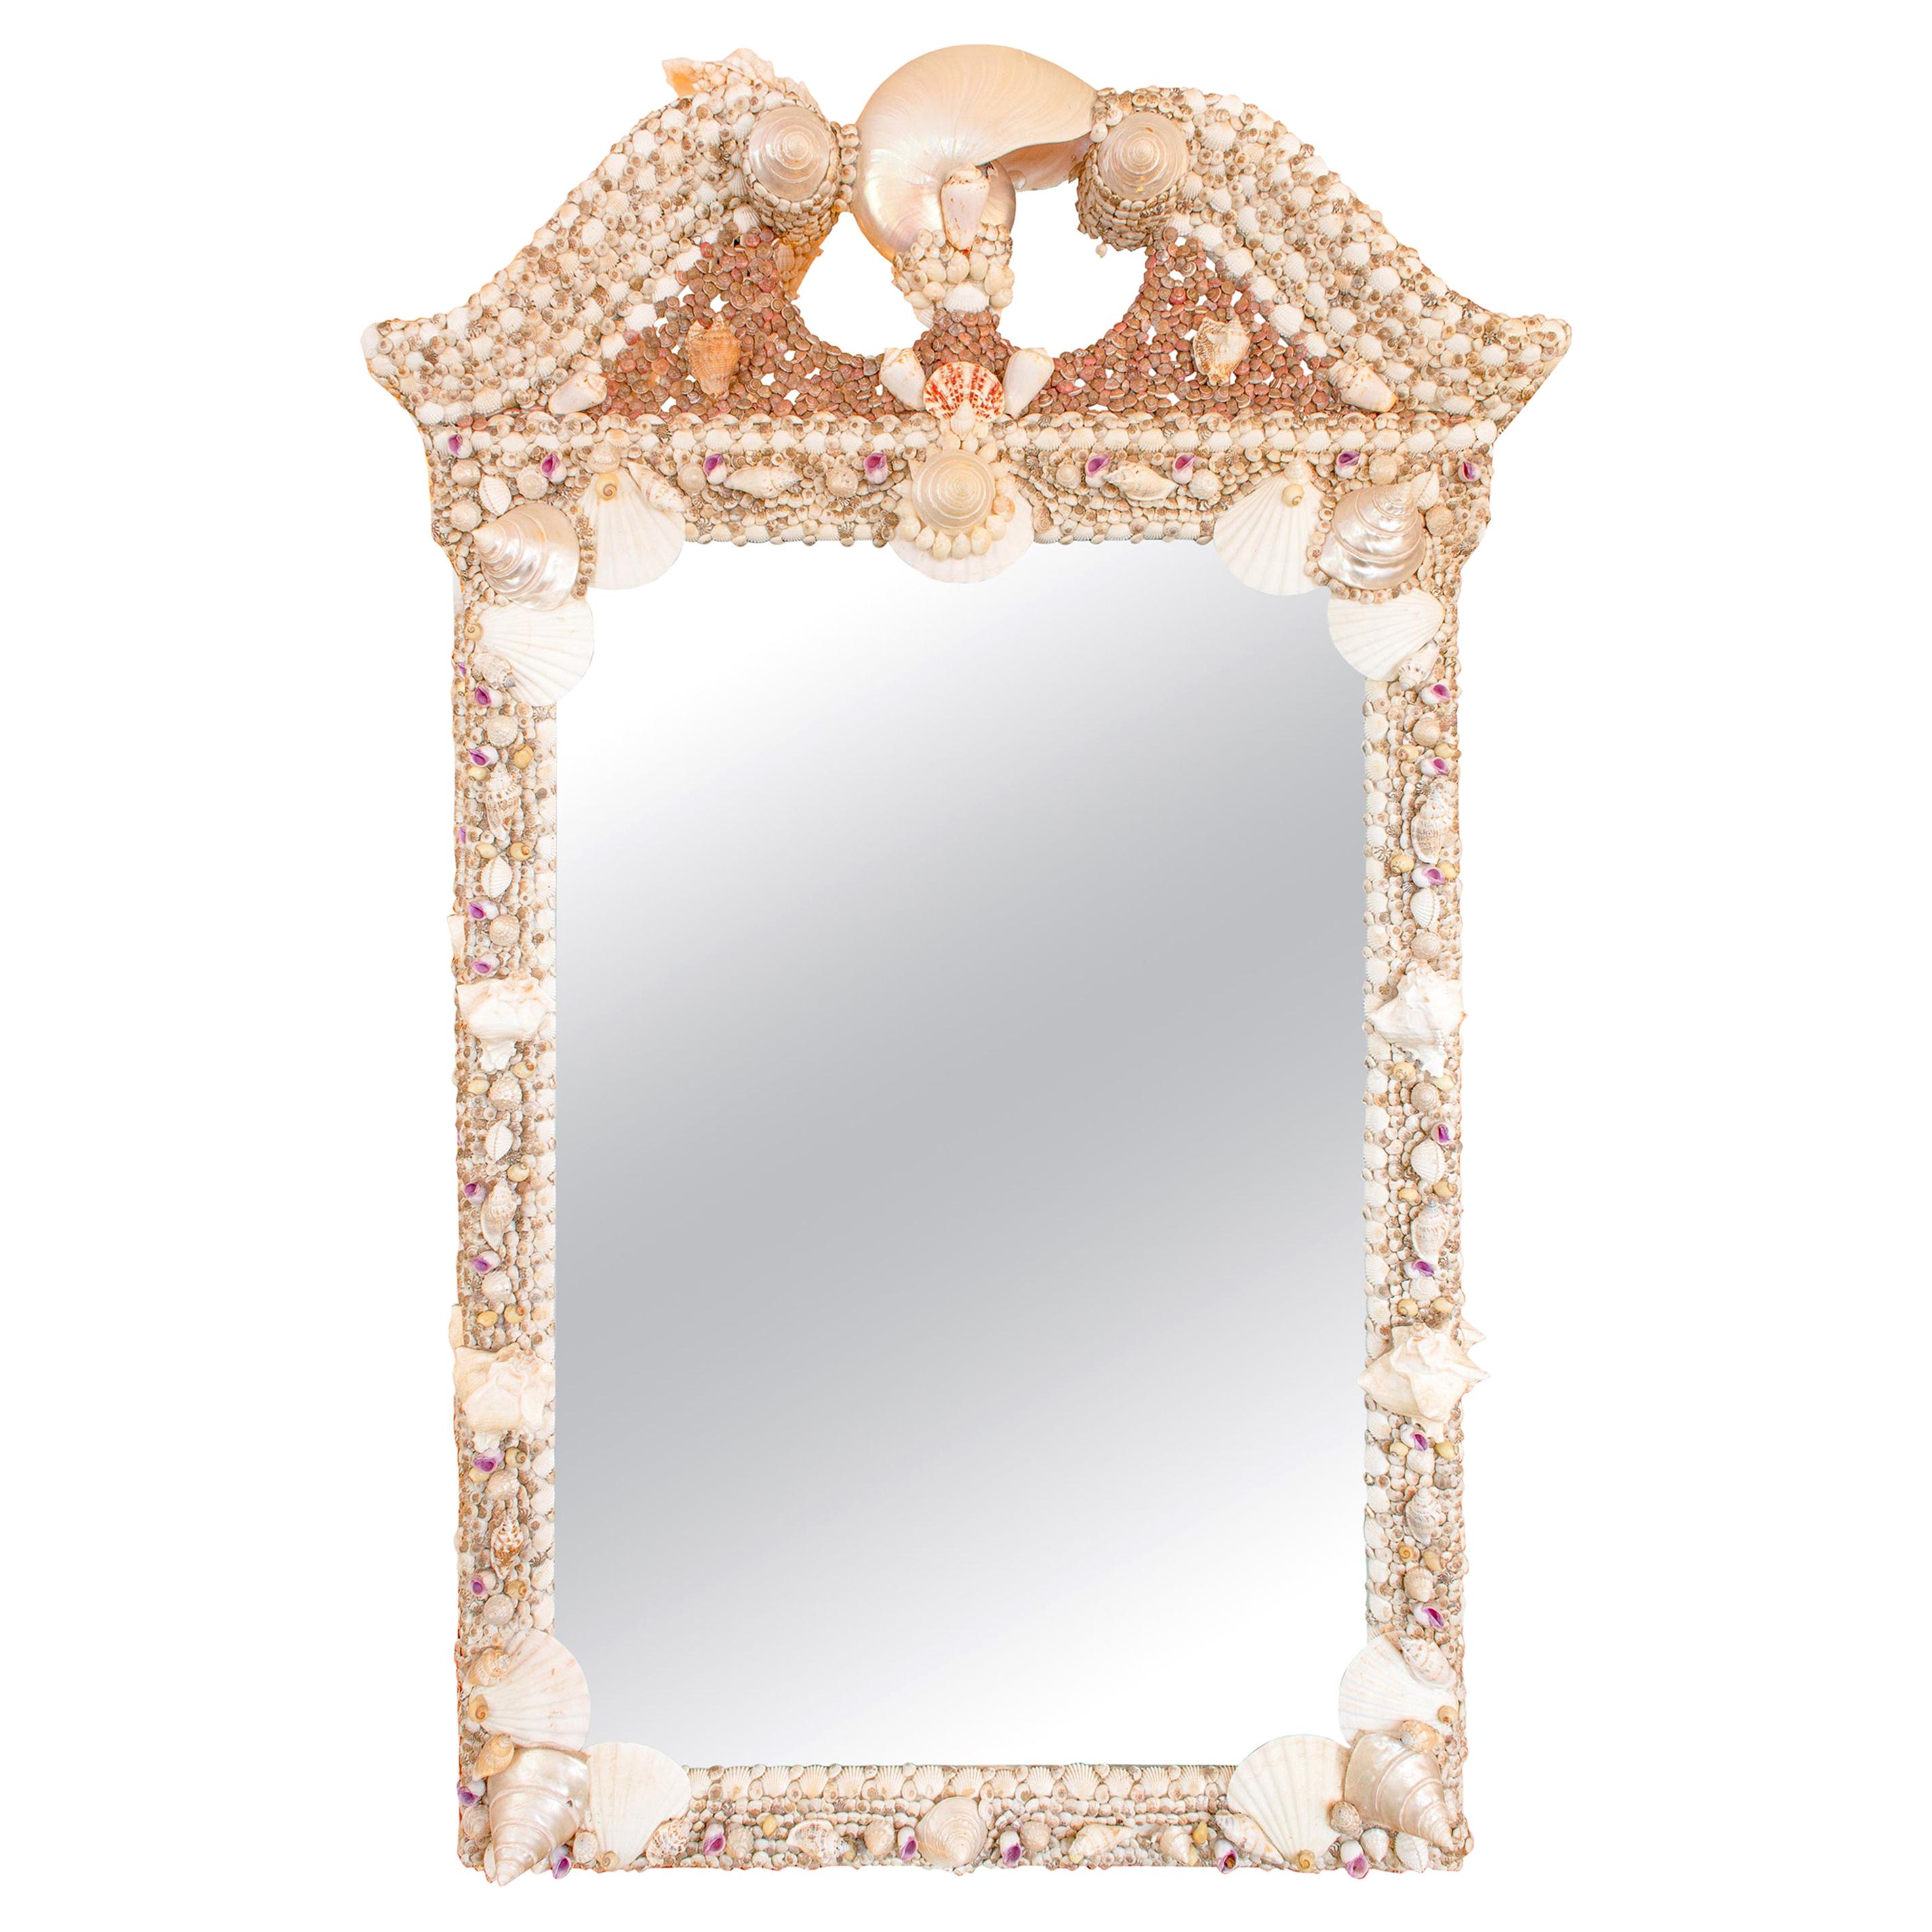 Shell Encrusted "Broken-Pediment Style" Mirror